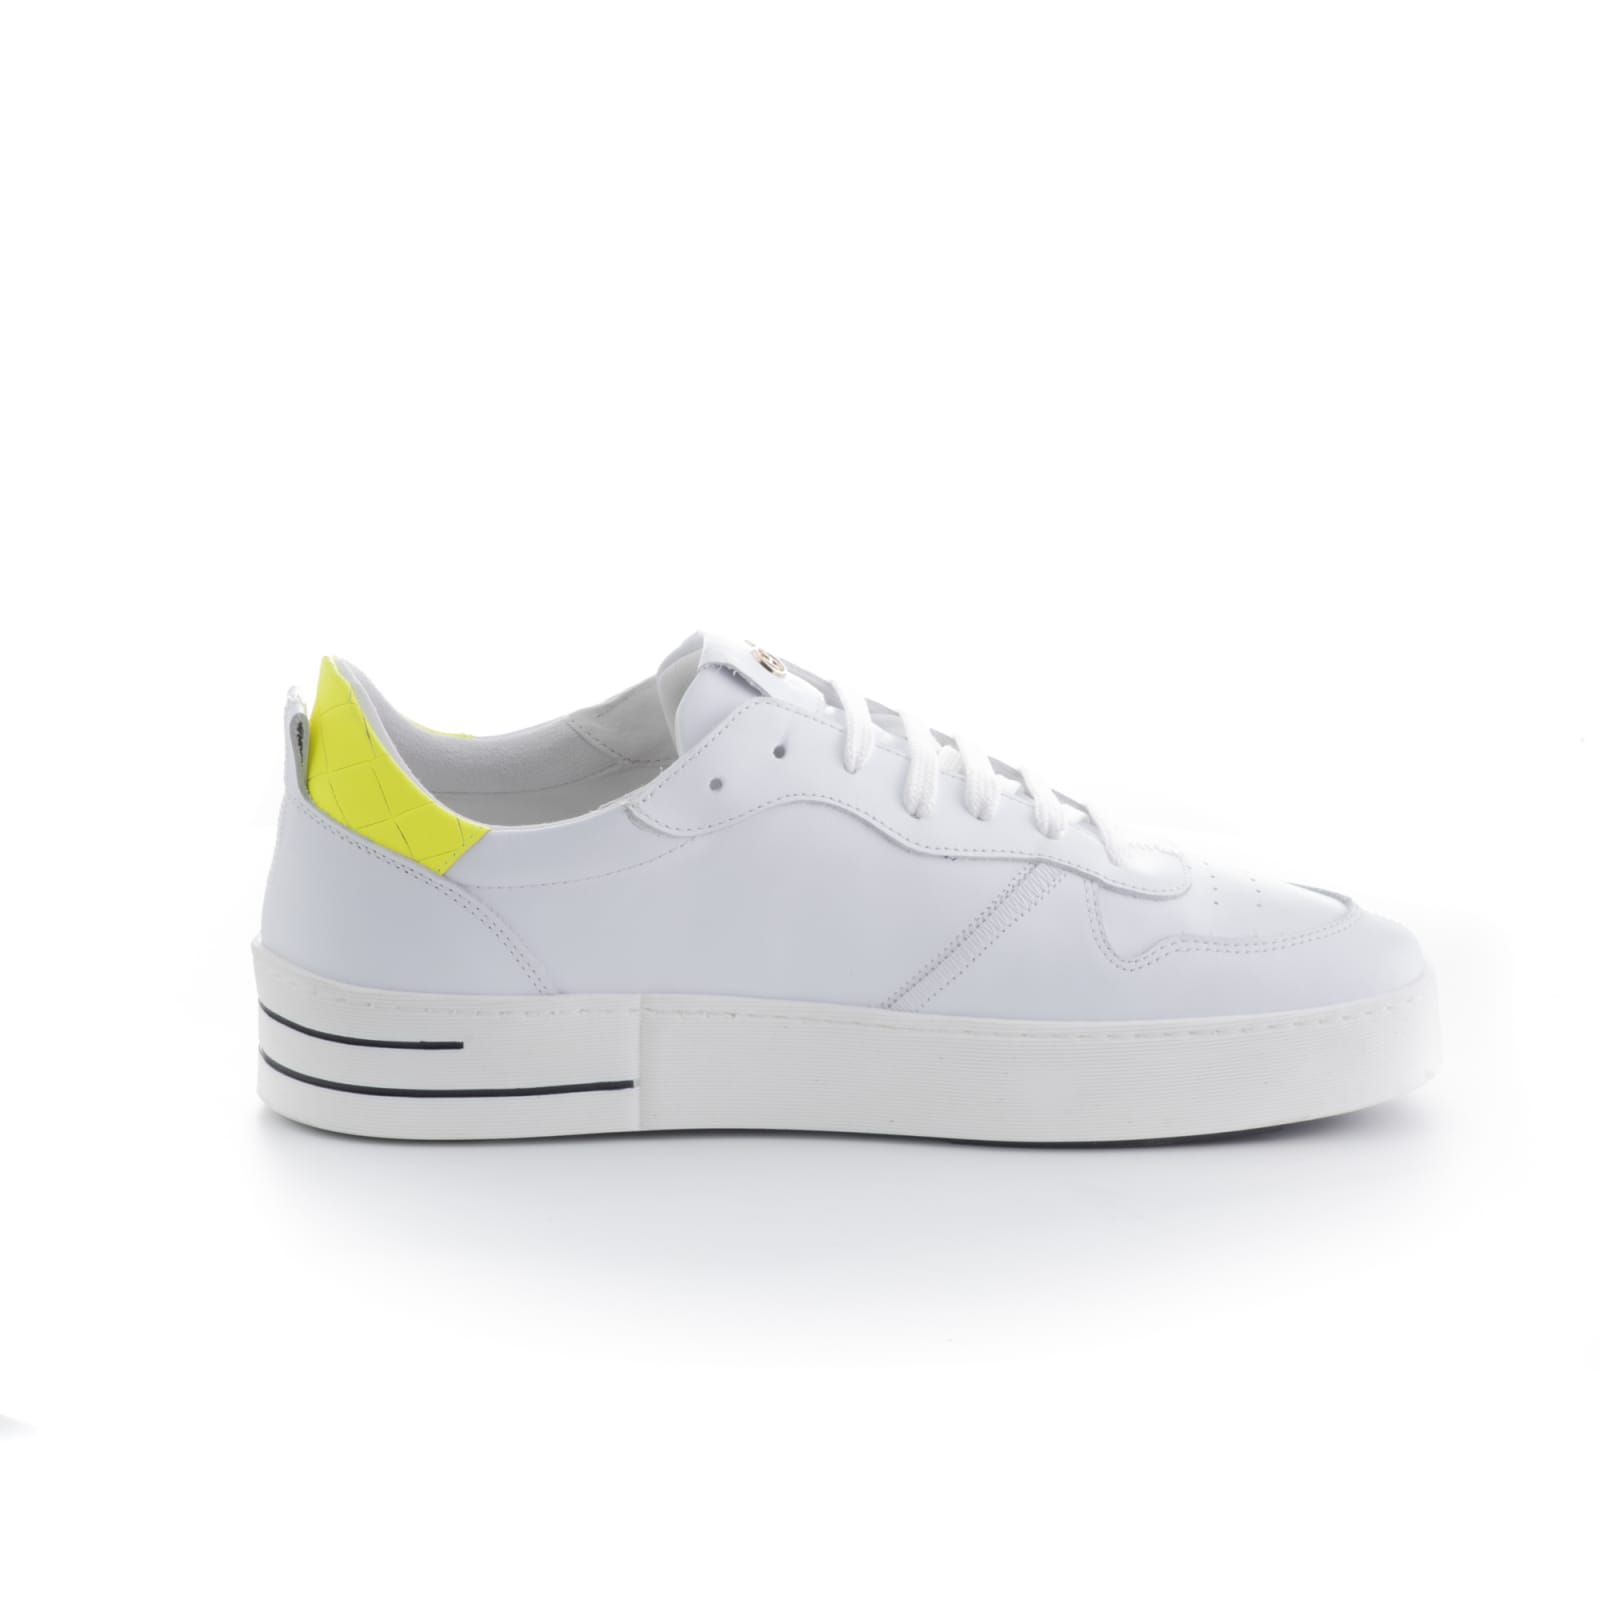 Hide & Jack Phantom White Yellow Sneakers